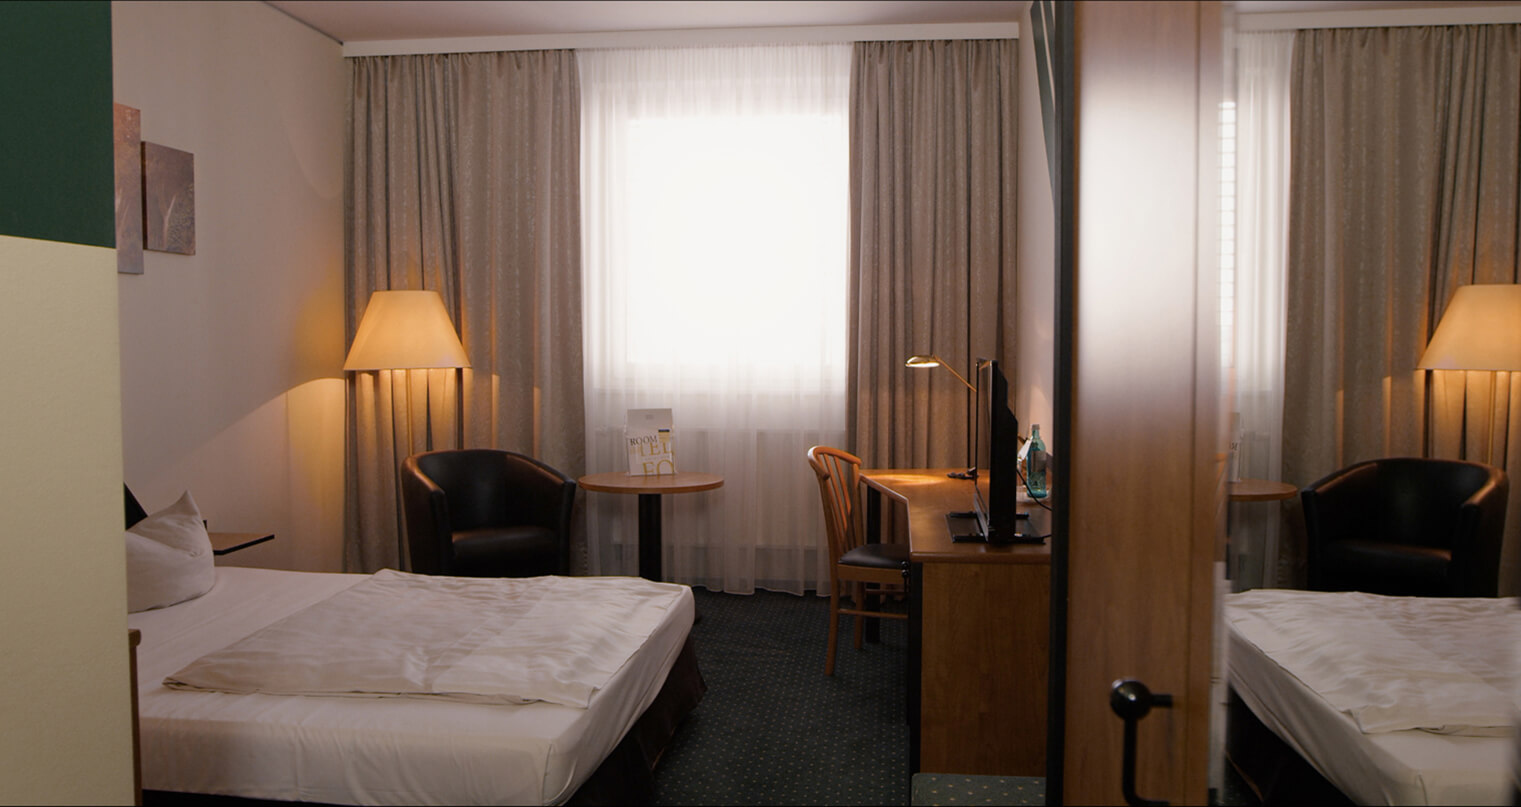 Complete hotel interior room renovation in the Novina Hotel Südwestpark Nuremberg using W945 film - before